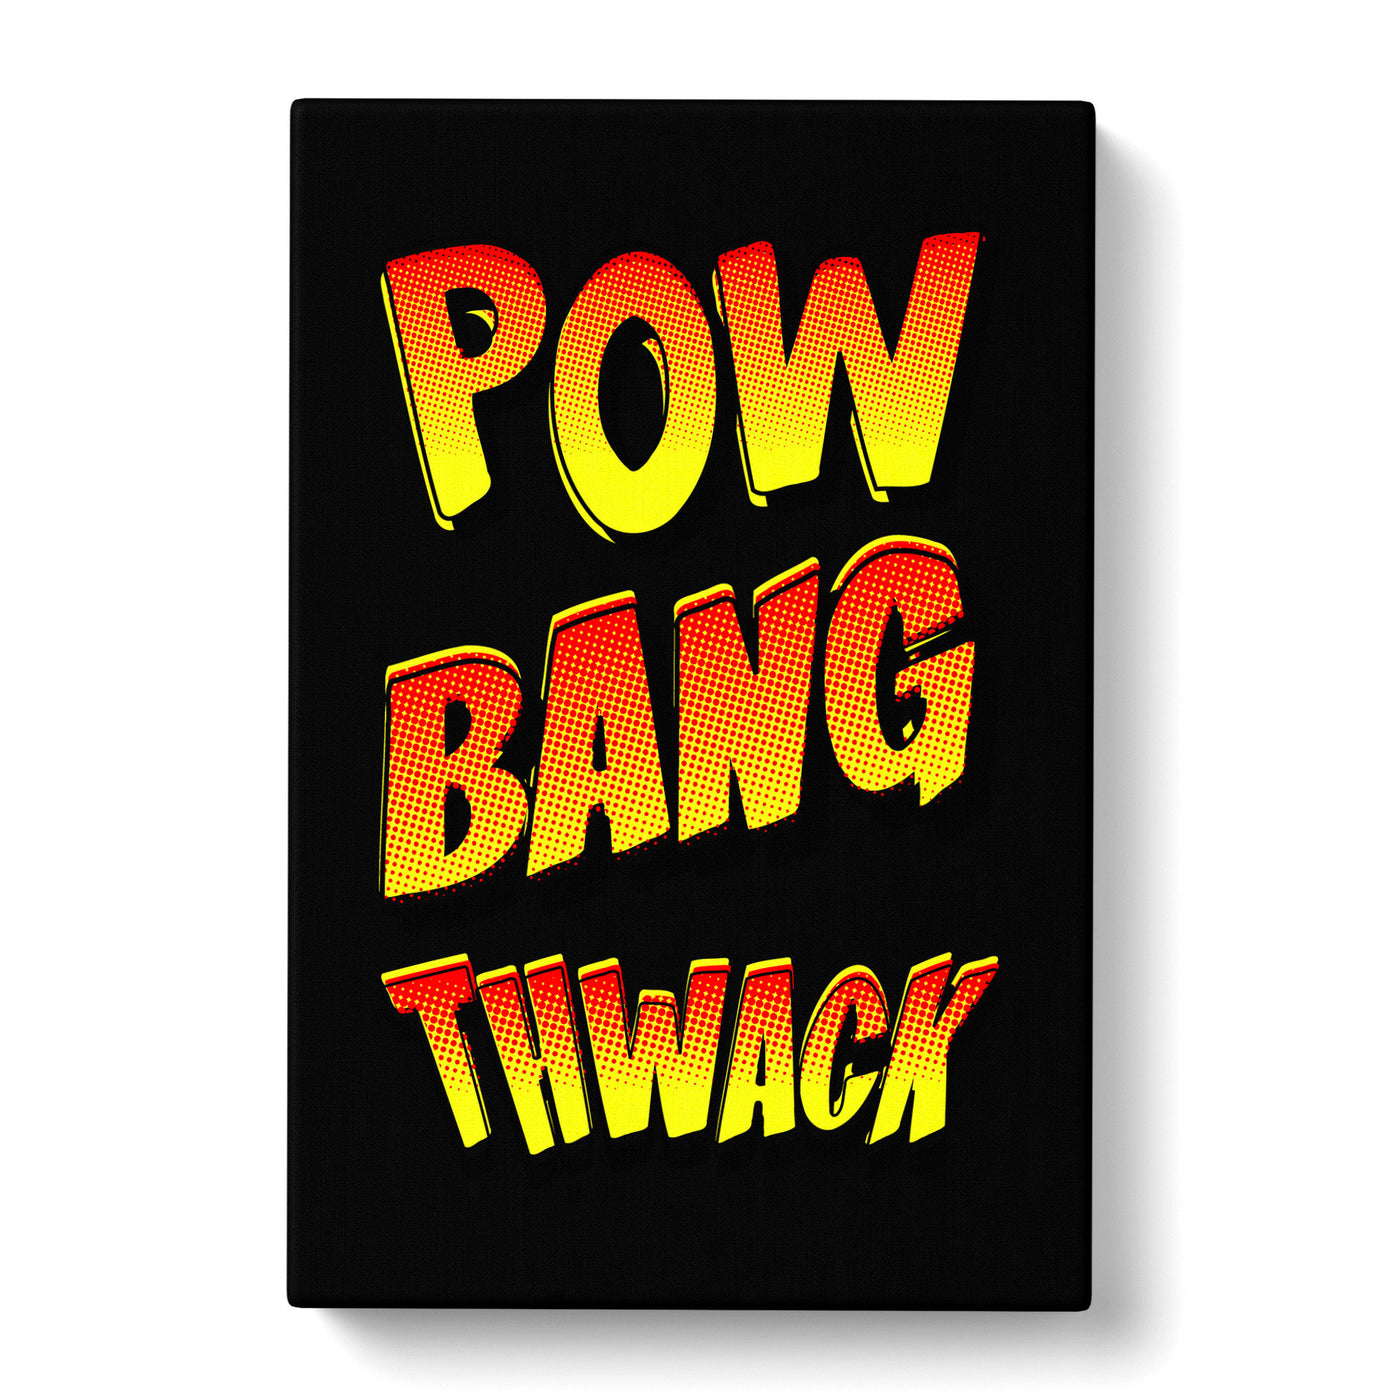 Pow Bang Thwack Typography Canvas Print Main Image